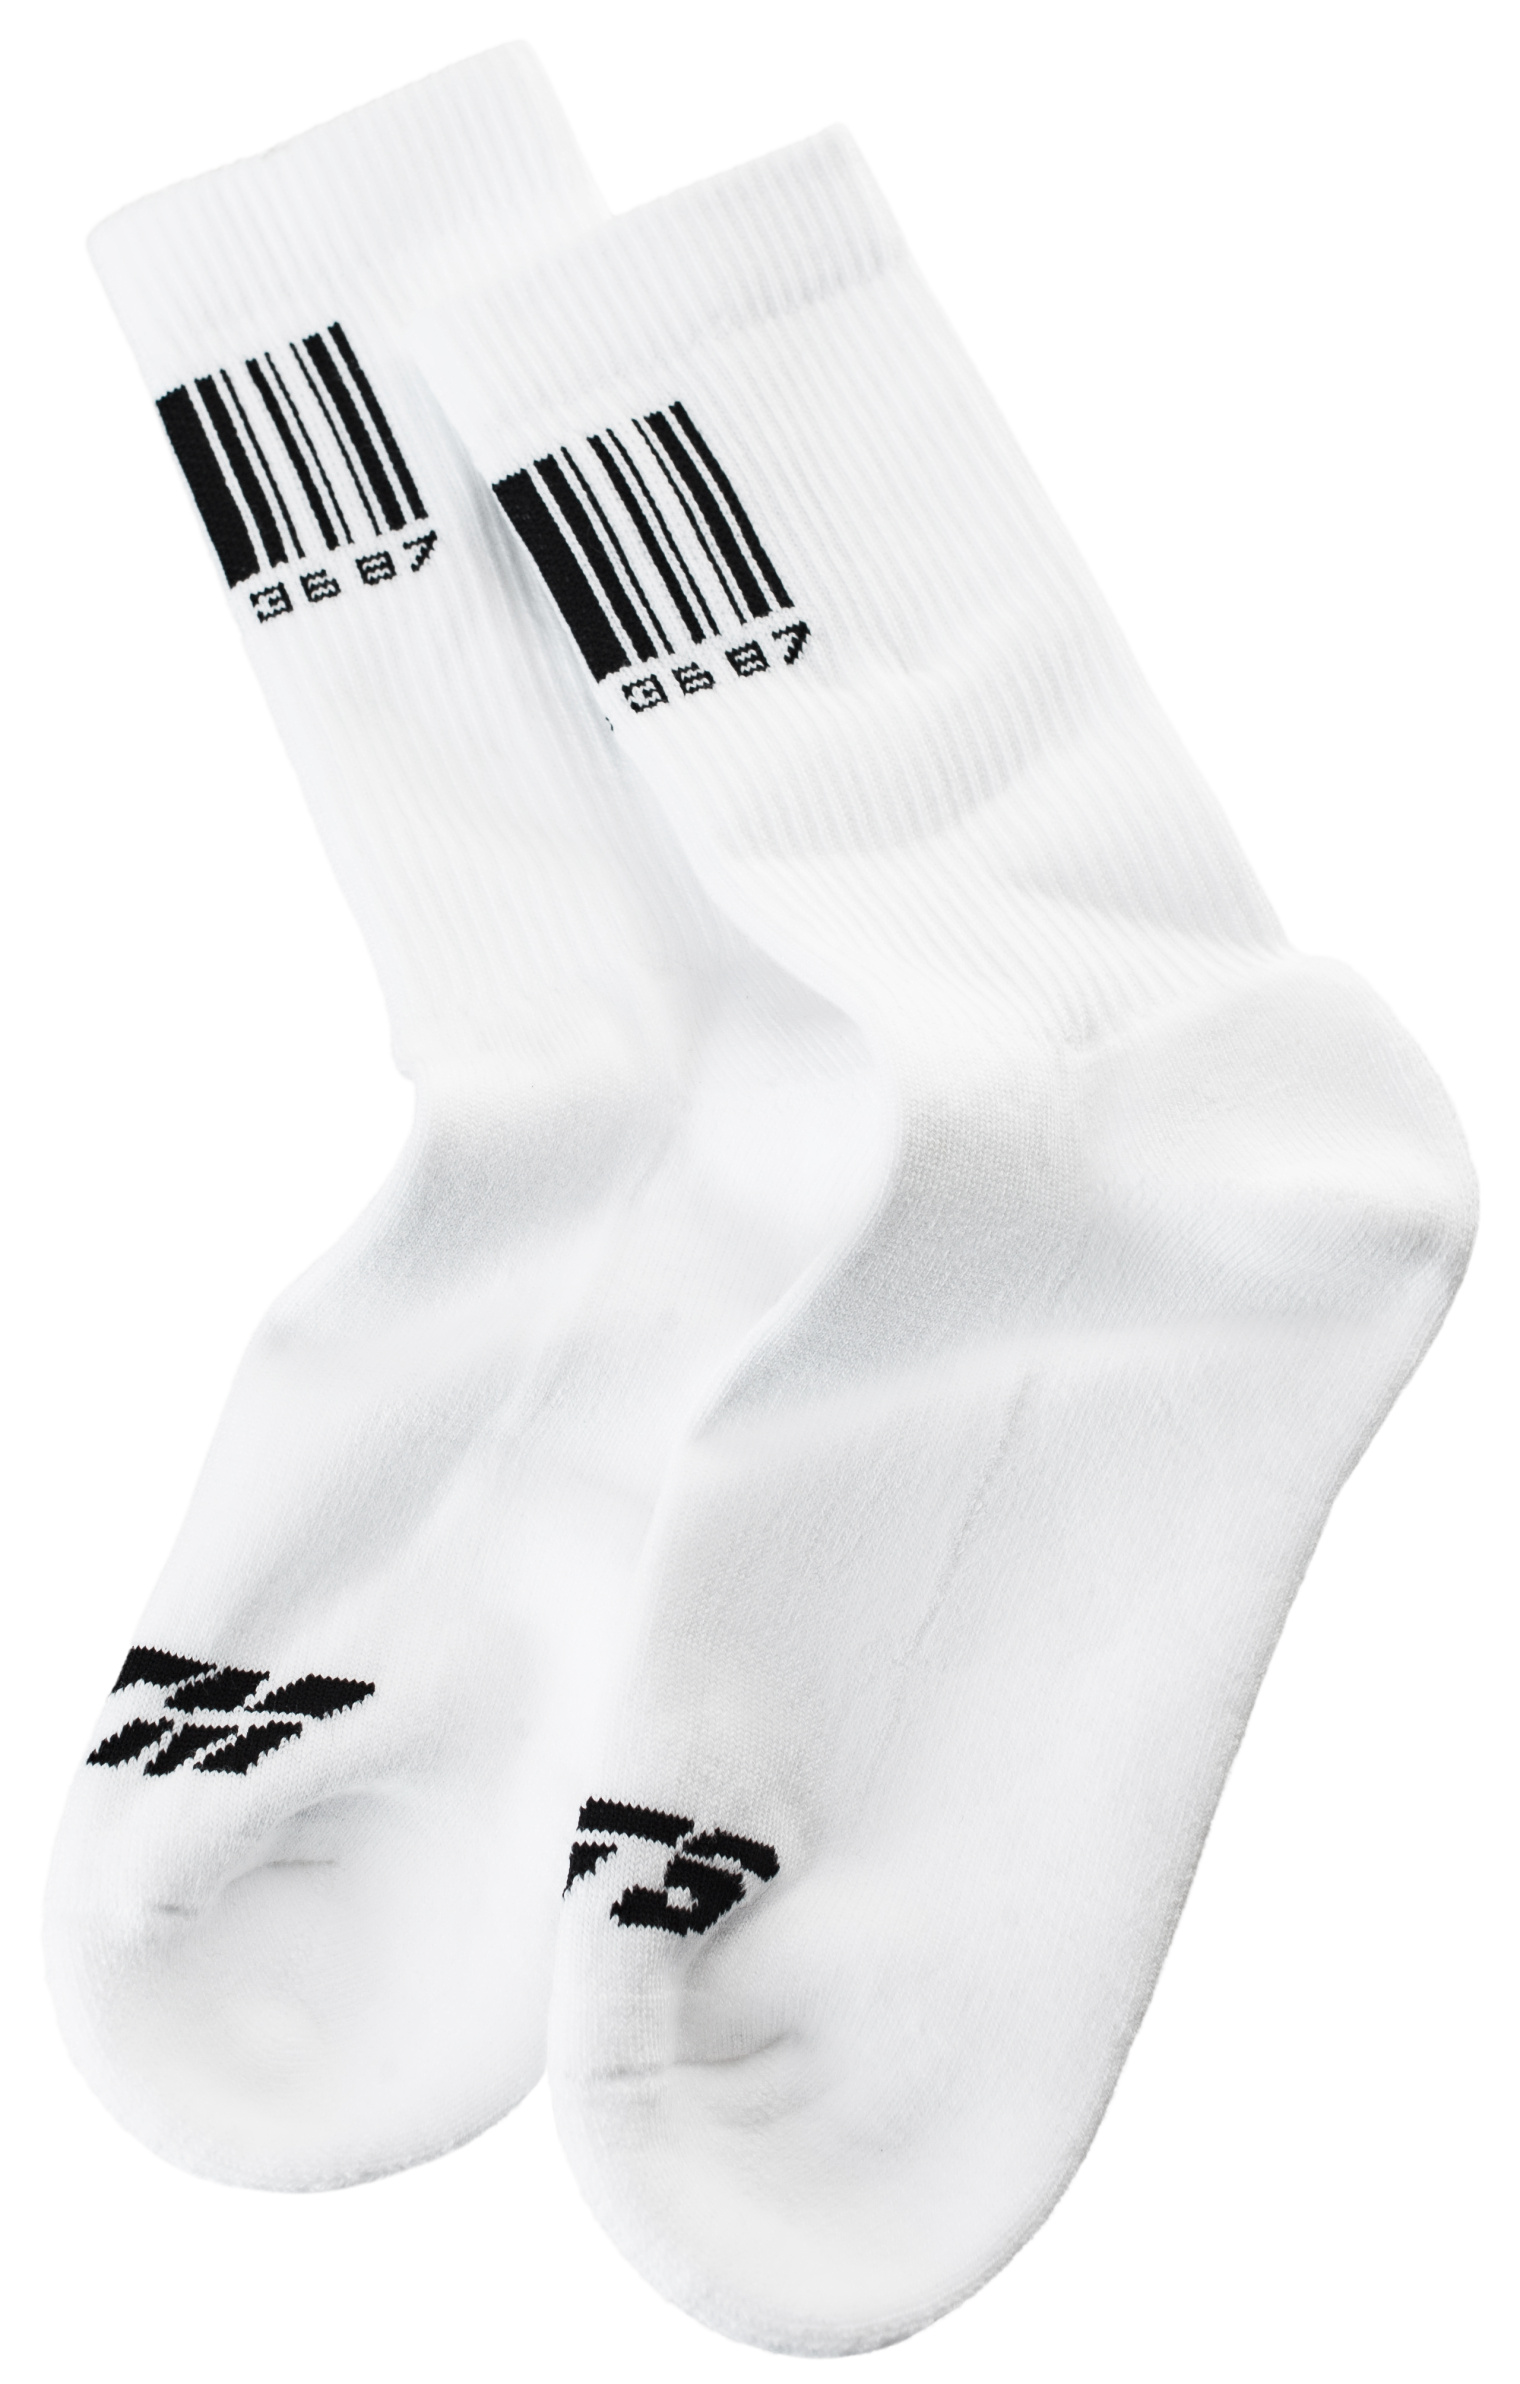 VTMNTS White Barcode Socks